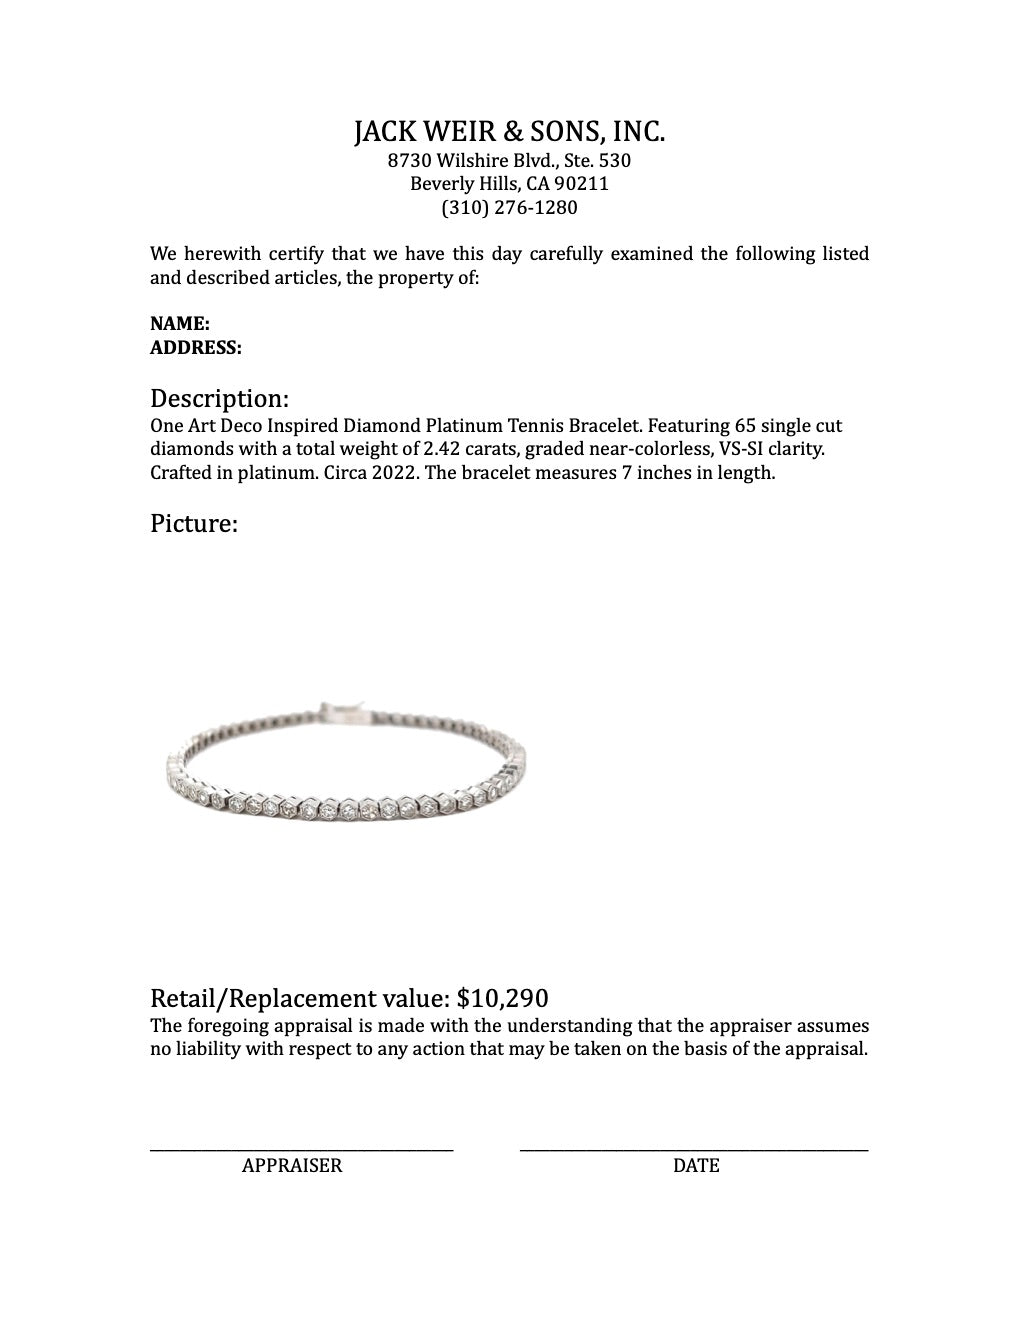 Art Deco Inspired 2.42 Carat Diamond Platinum Tennis Bracelet Bracelets Jack Weir & Sons   